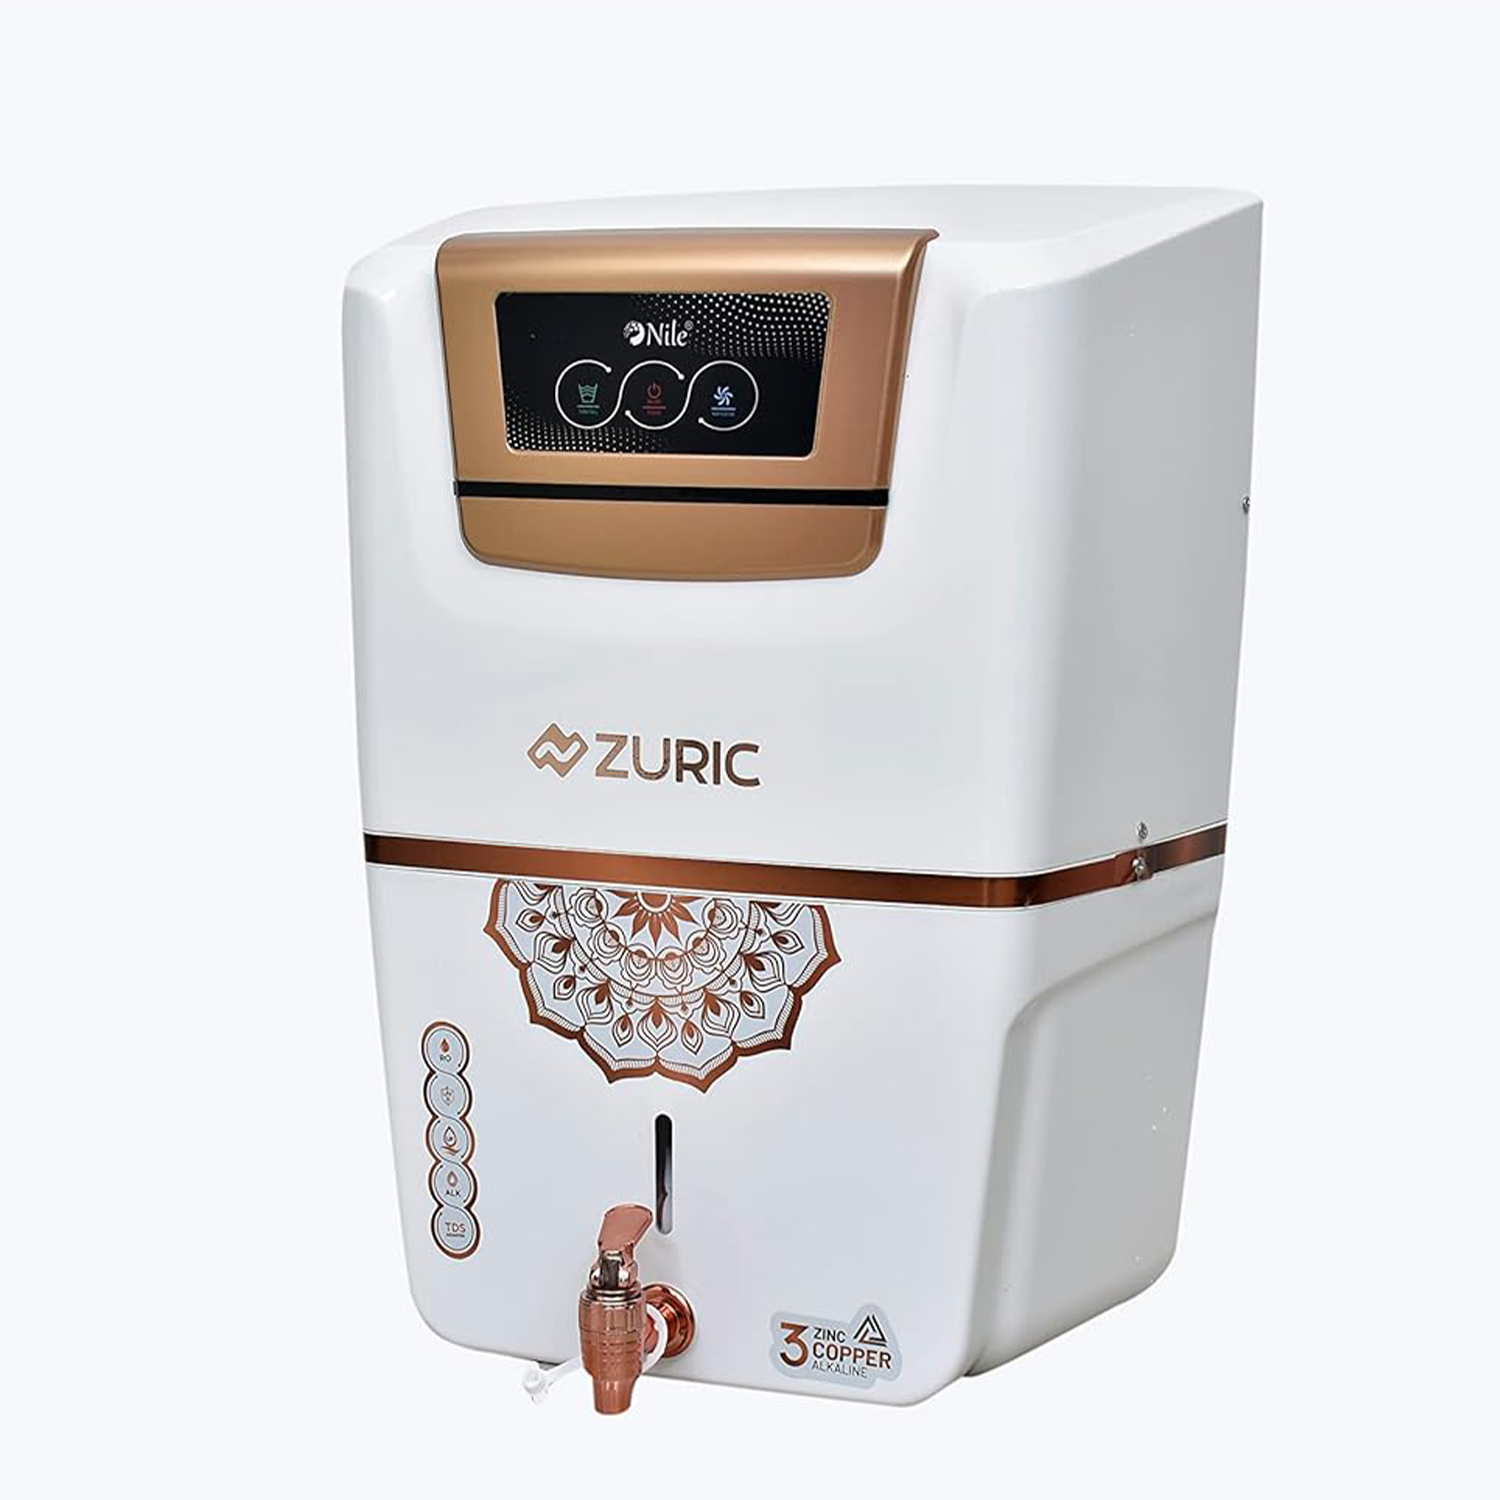 Zuric AQUA Zuric RO Water Purifier With Alkaline, UV+UF+TDS, Active Copper and Taste Adjuster, 13L Storage White Home and Kitchen Use